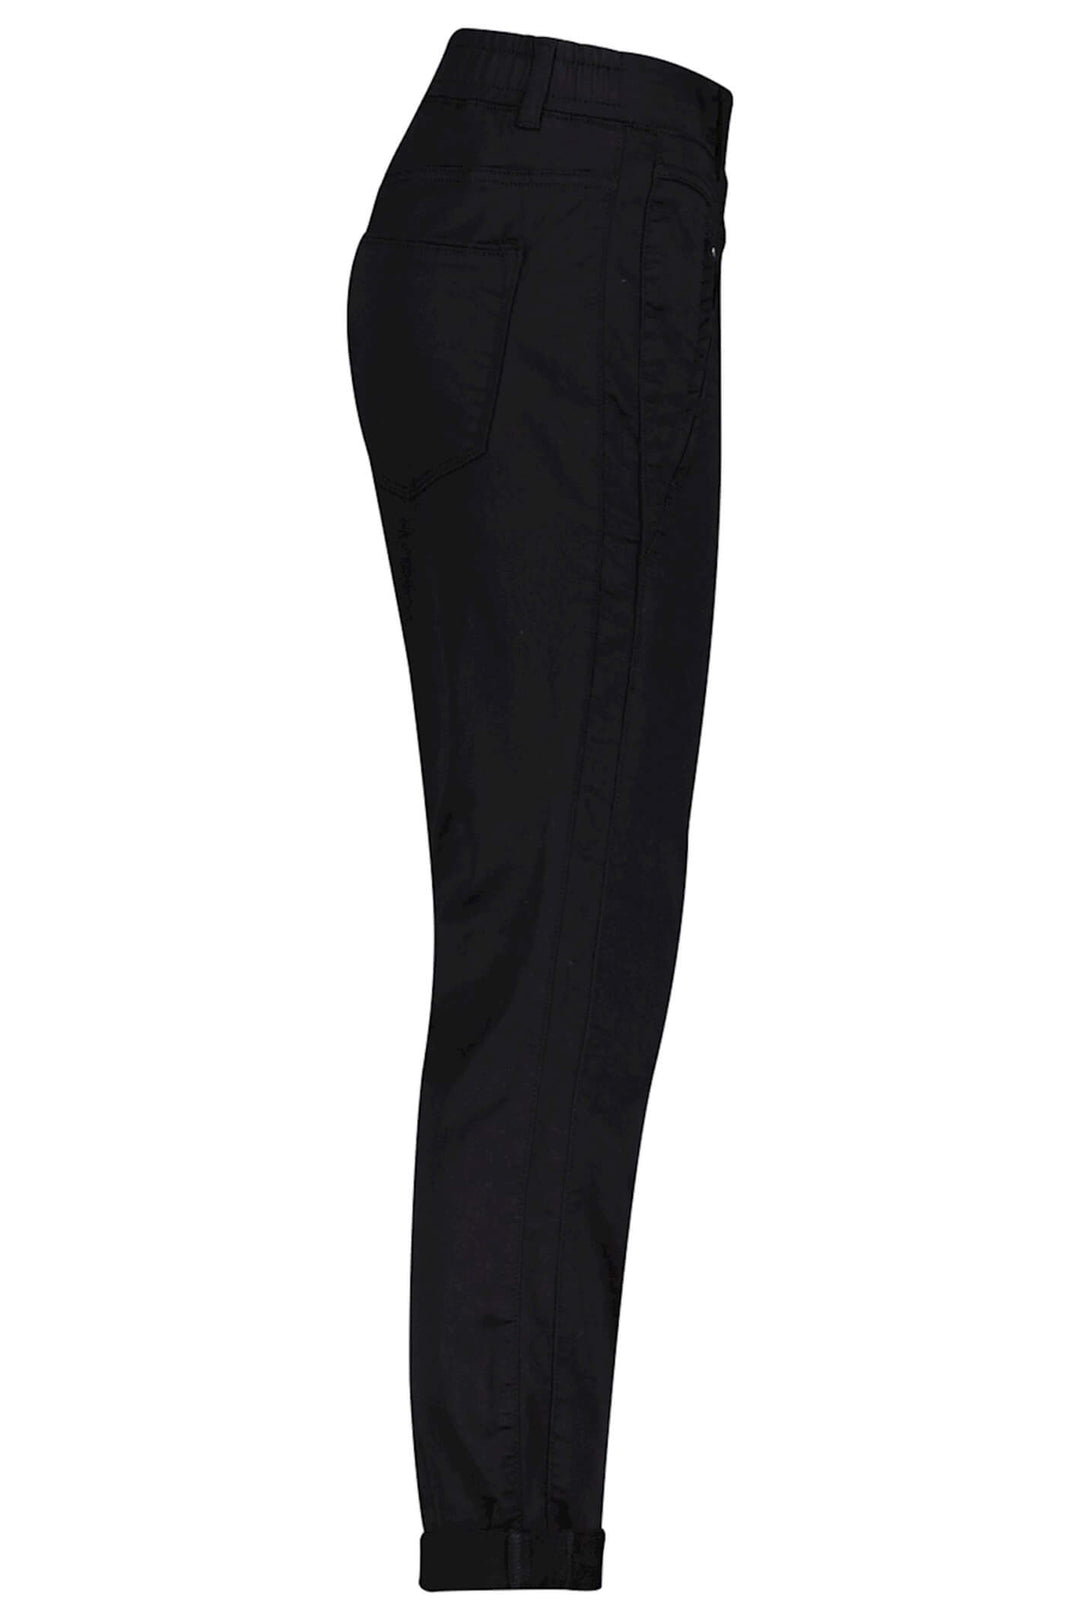 Red Button SRB4042 Tessy Black Jog Pull-On Trousers - Olivia Grace Fashion